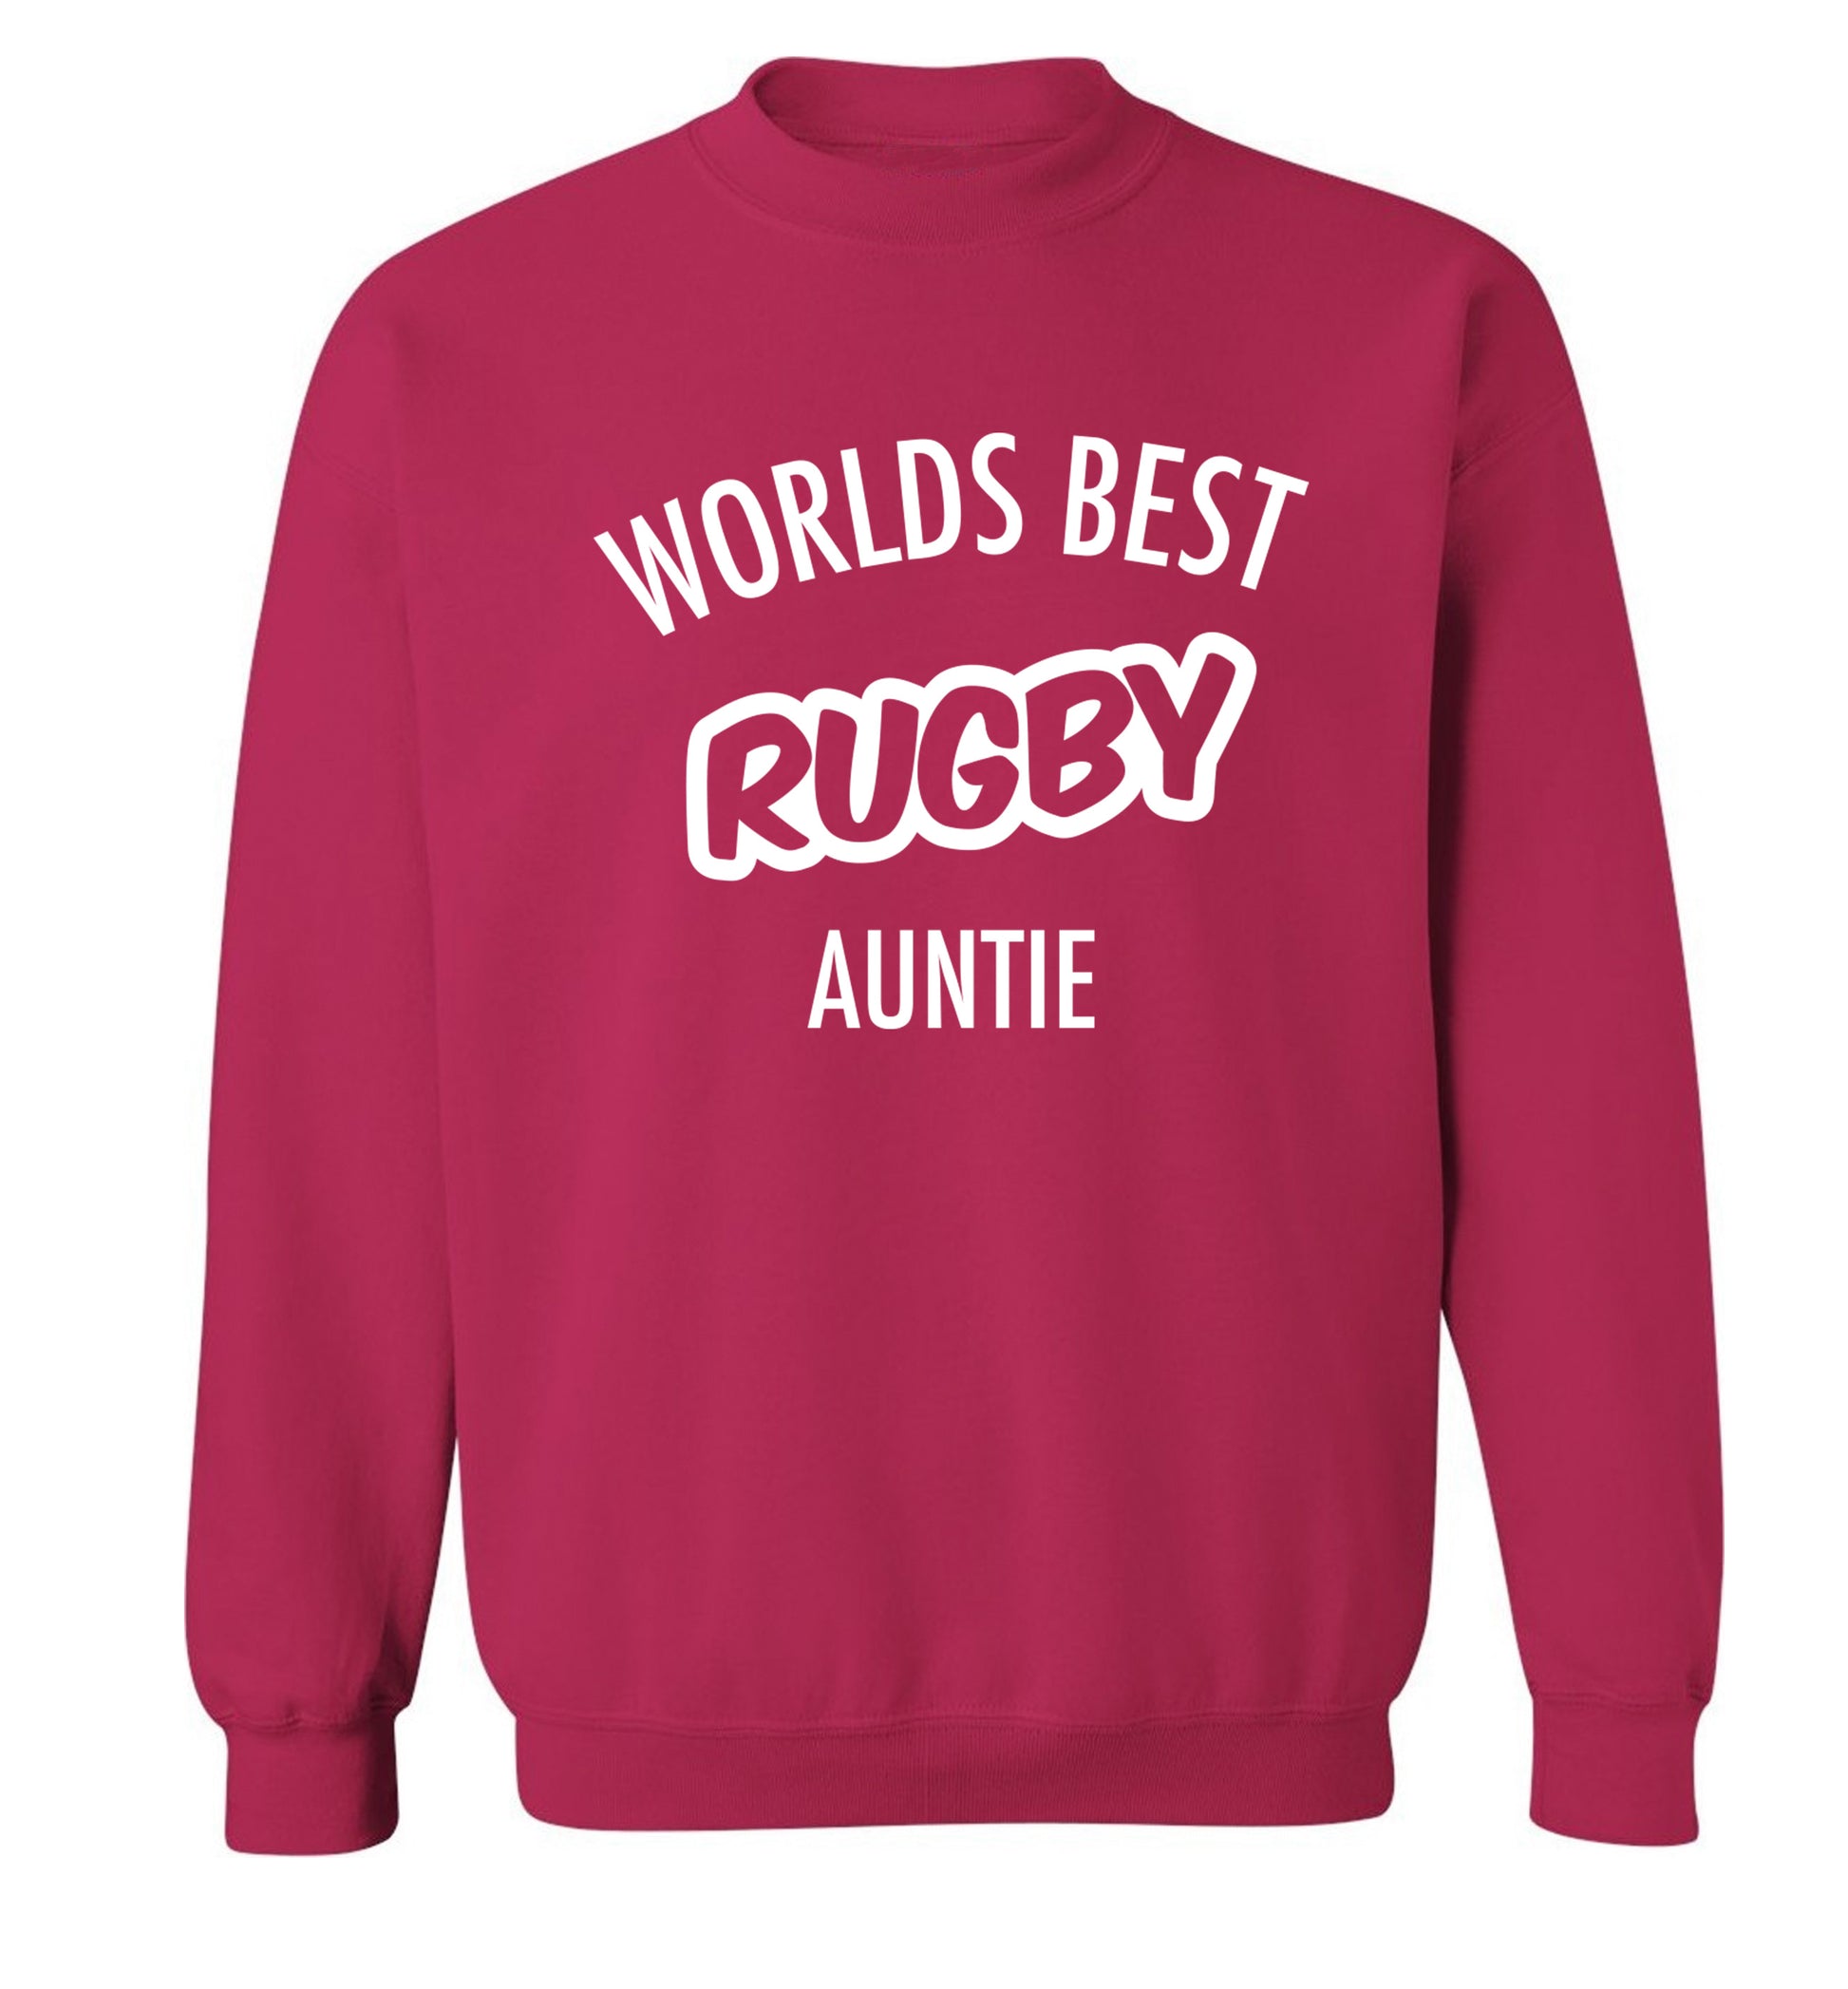 Worlds best rugby auntie Adult's unisex pink Sweater 2XL